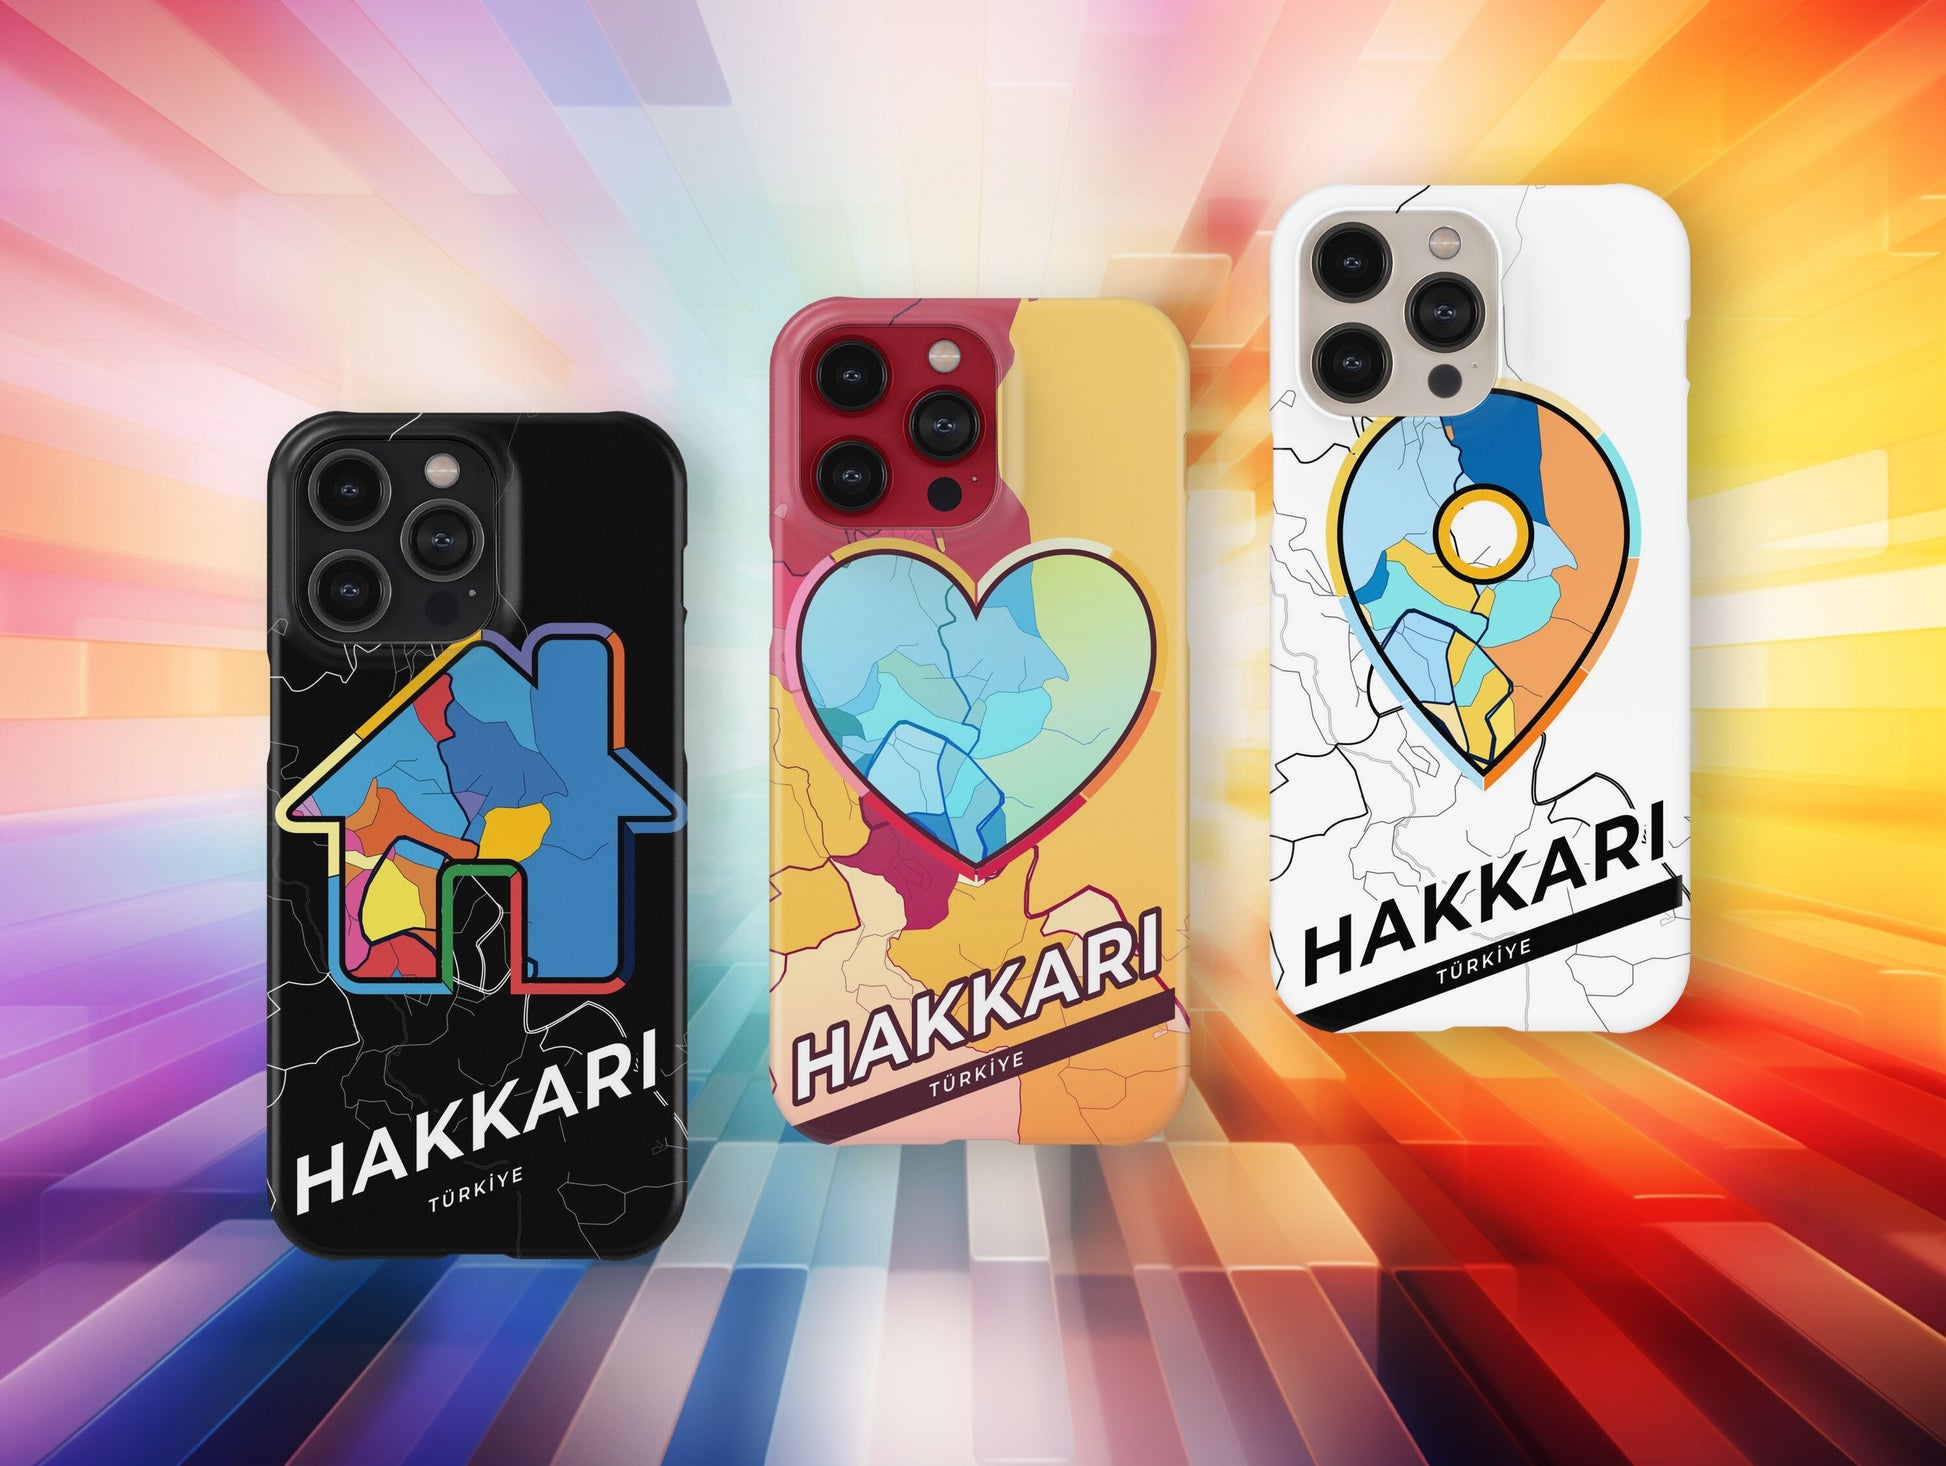 Hakkâri Turkey slim phone case with colorful icon. Birthday, wedding or housewarming gift. Couple match cases.